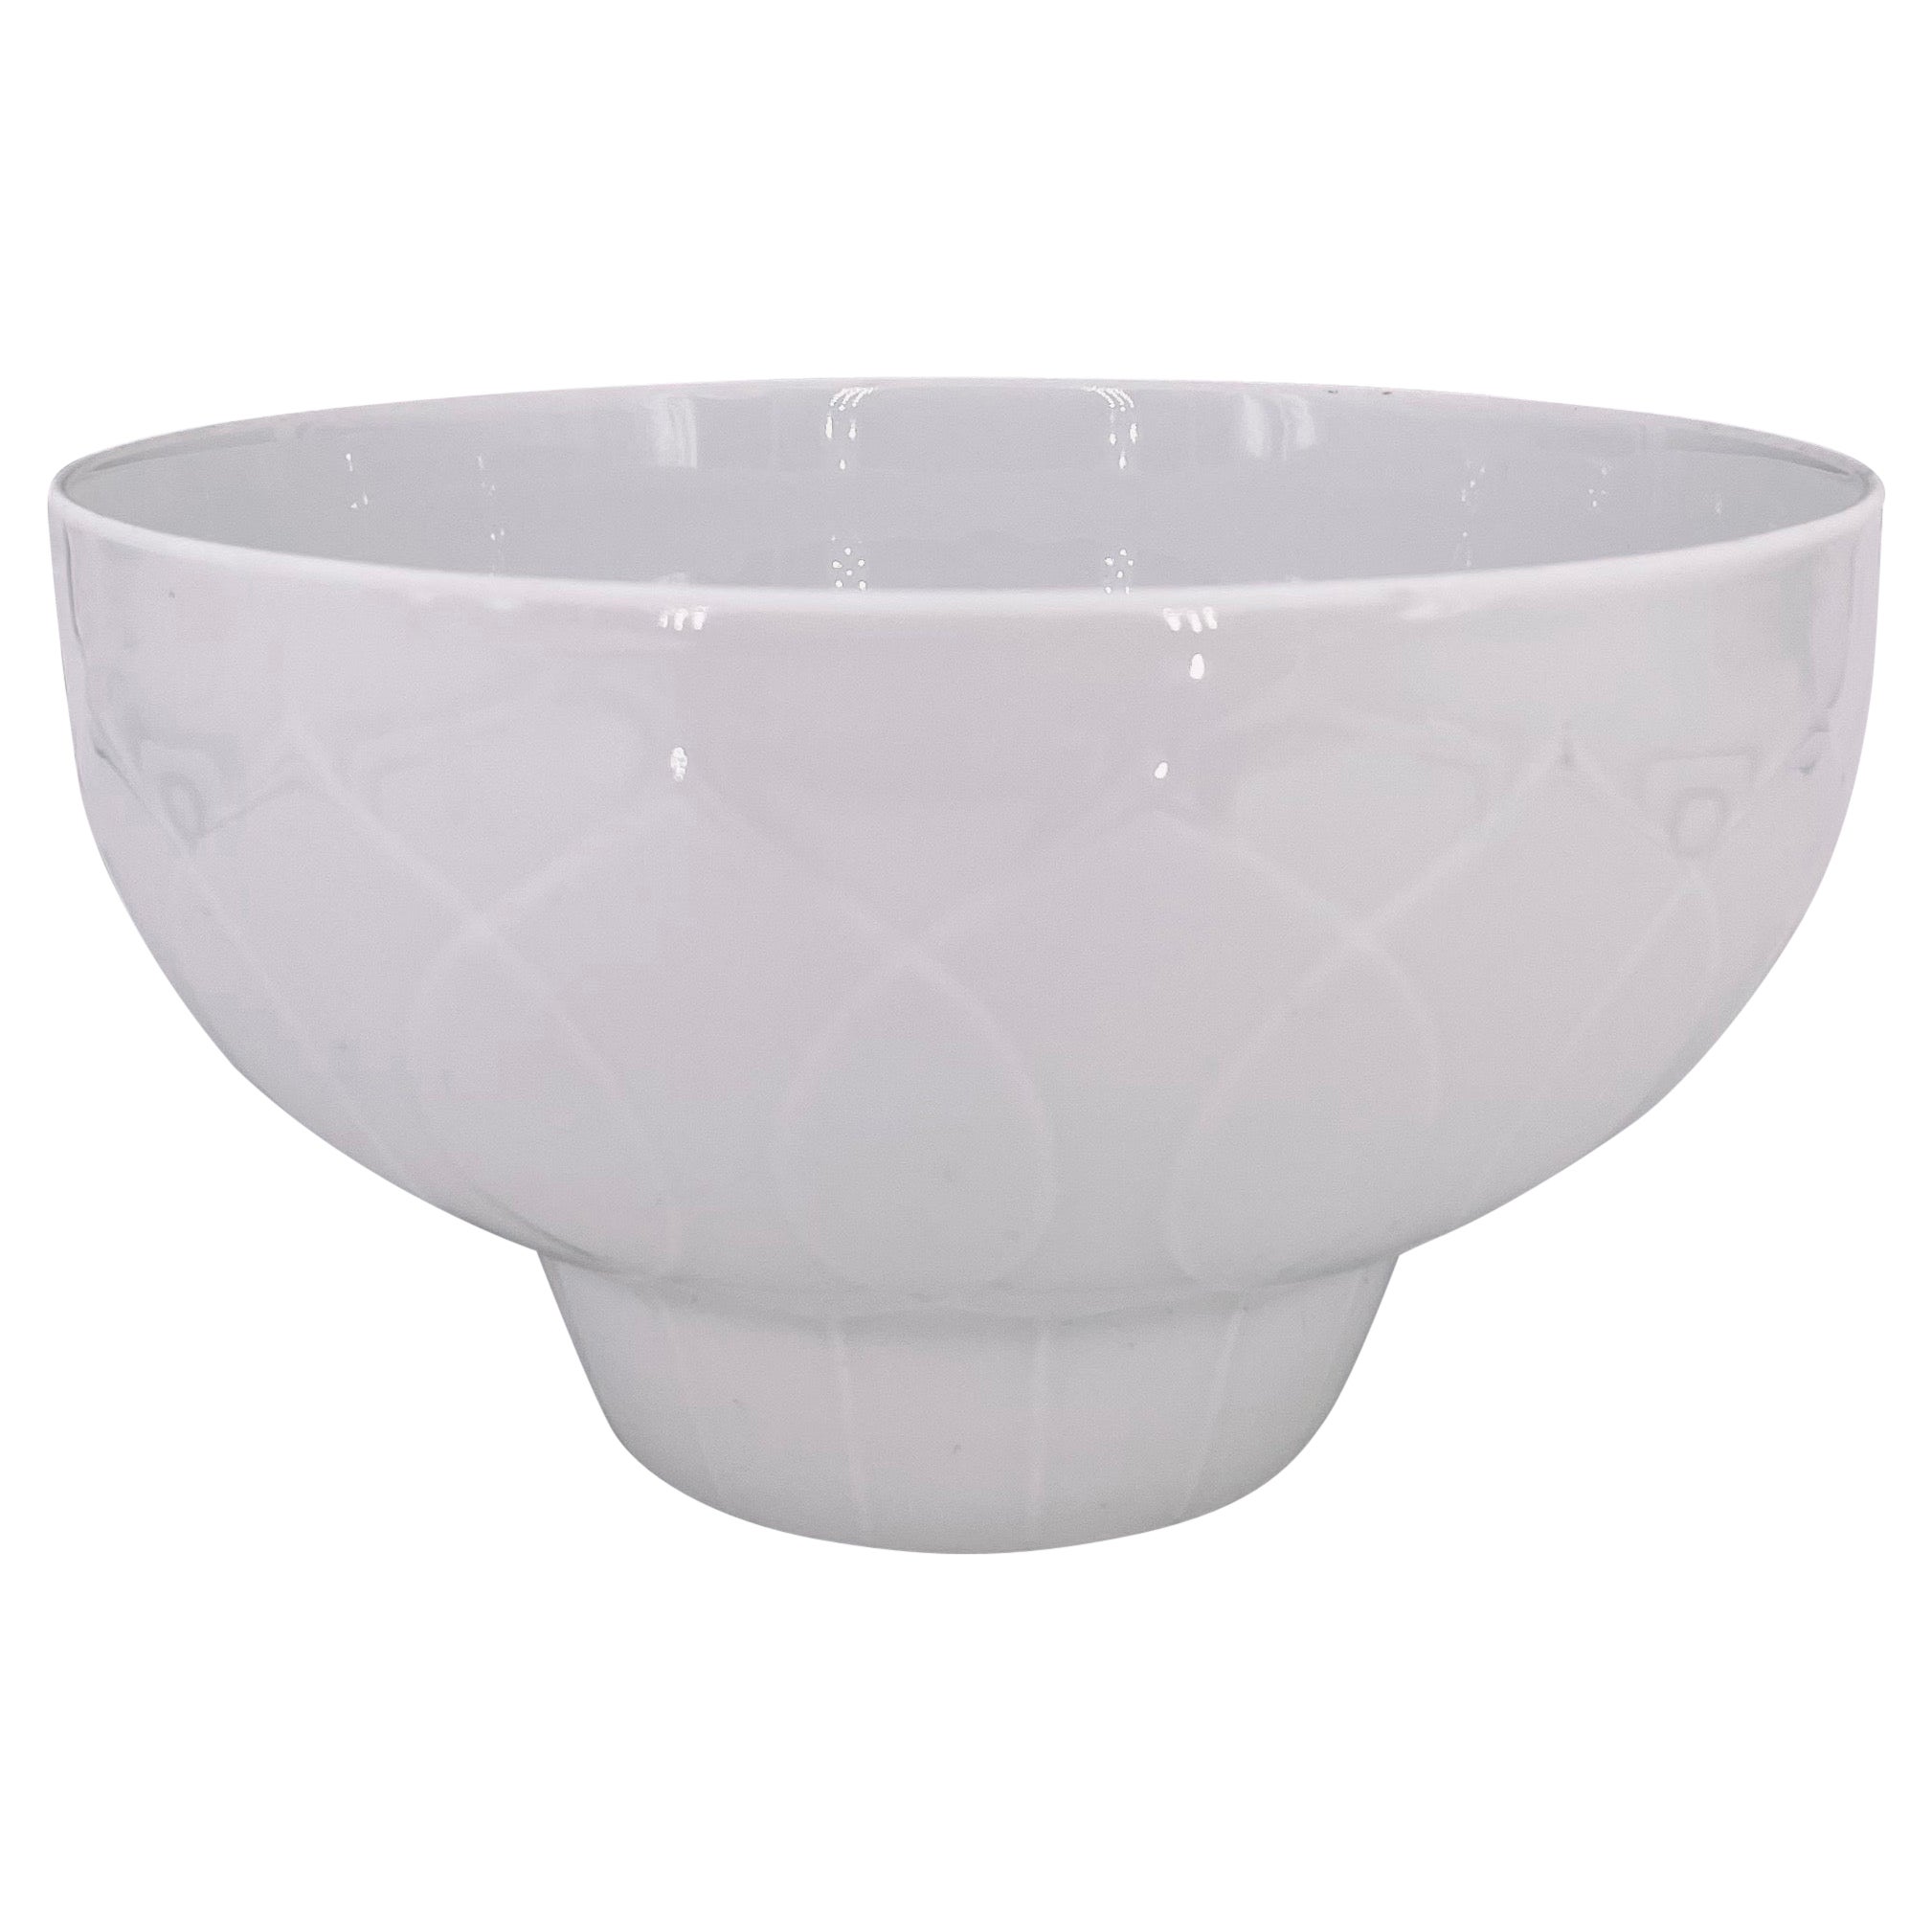 Rosenthal Studio Line White Porcelain Lotus Design Bowl by Bjorn Wiinblad